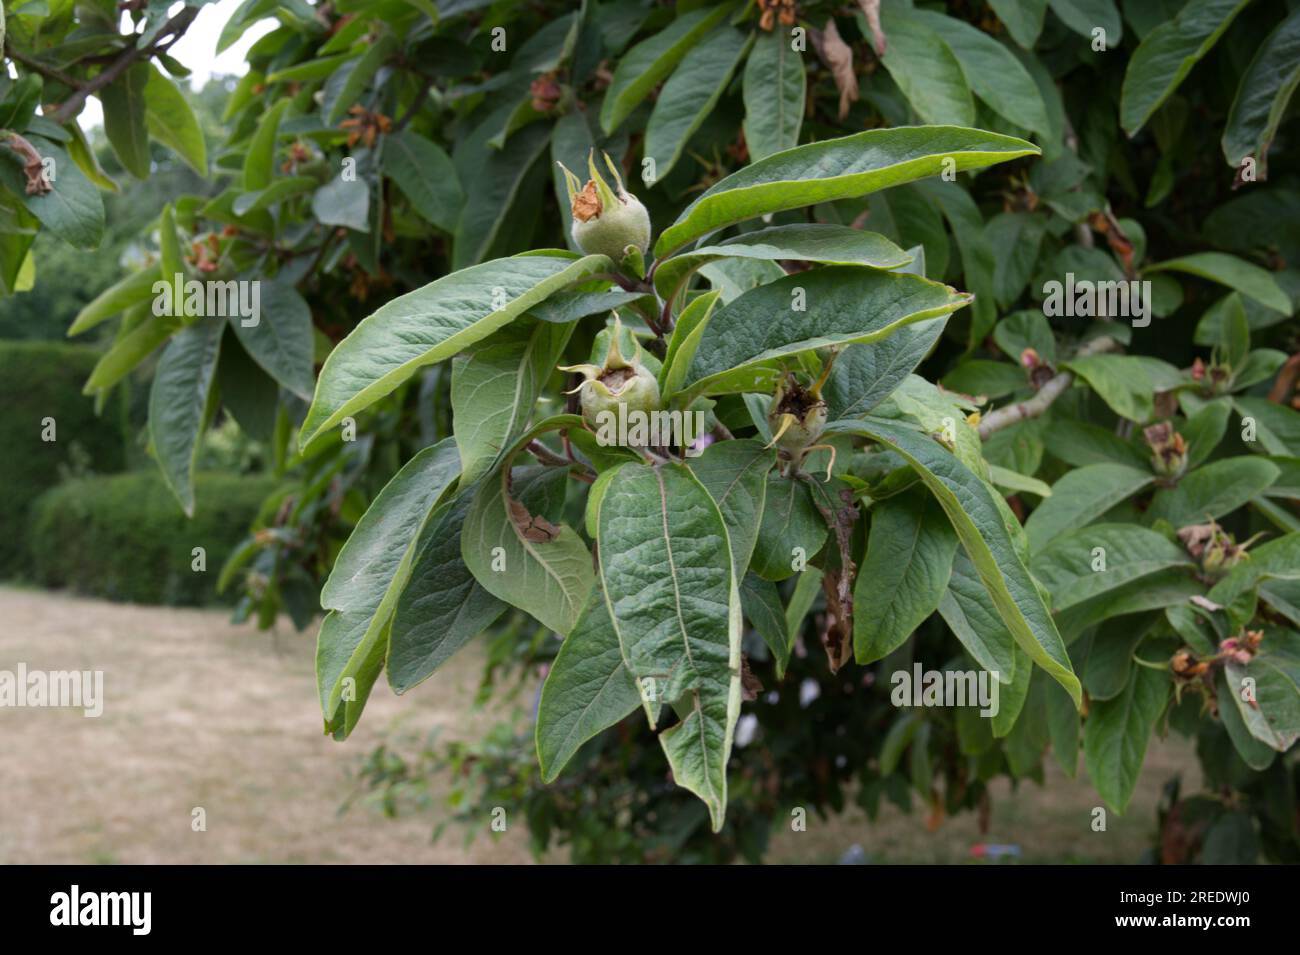 Young summer fruit of medlar or Mespilus germanica tree UK June Stock Photo